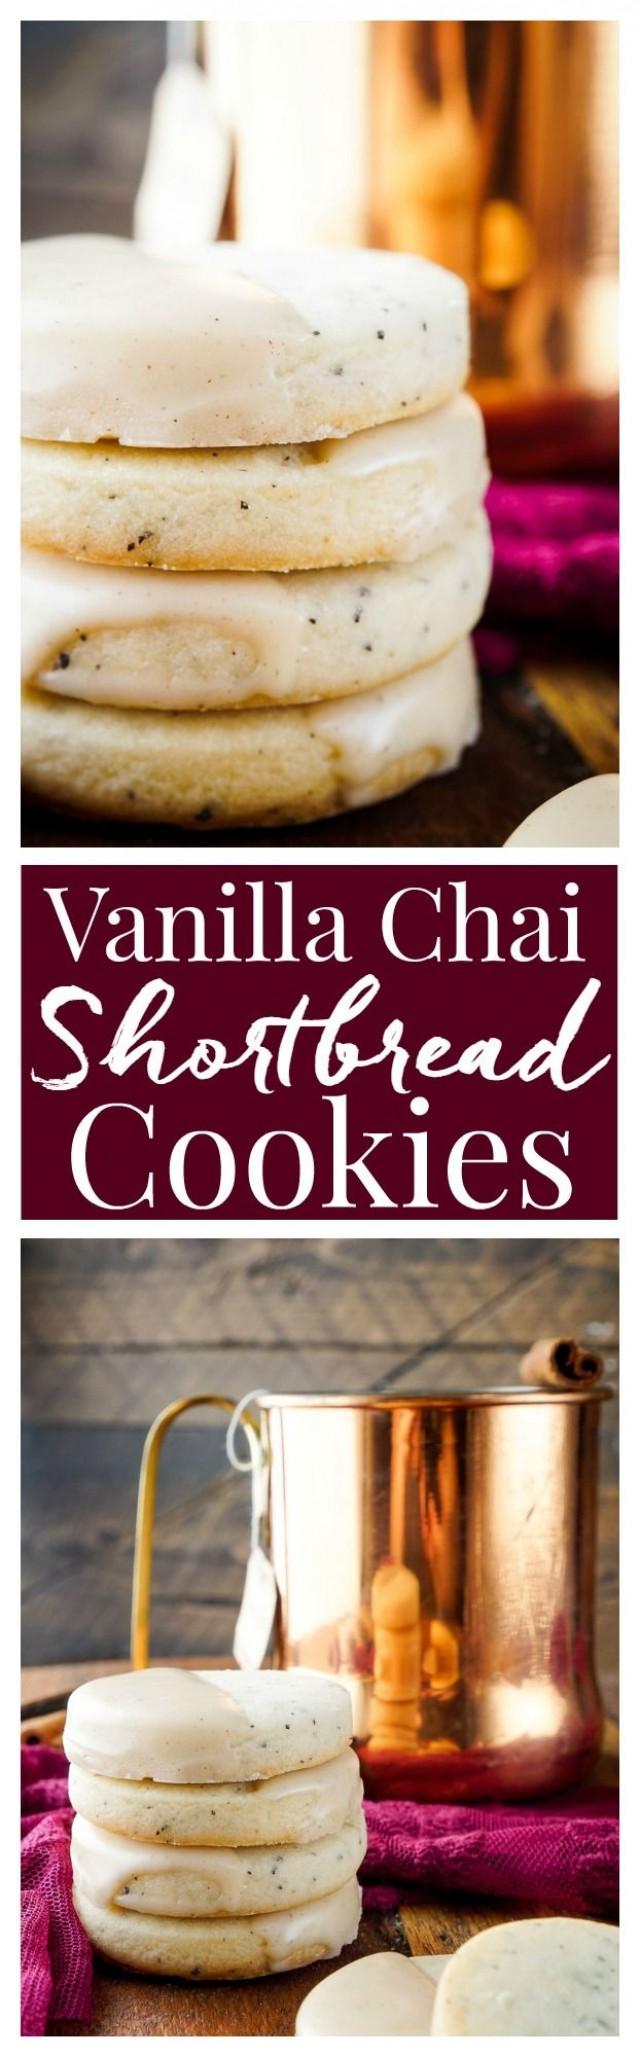 wedding photo - Vanilla Chai Shortbread Cookies